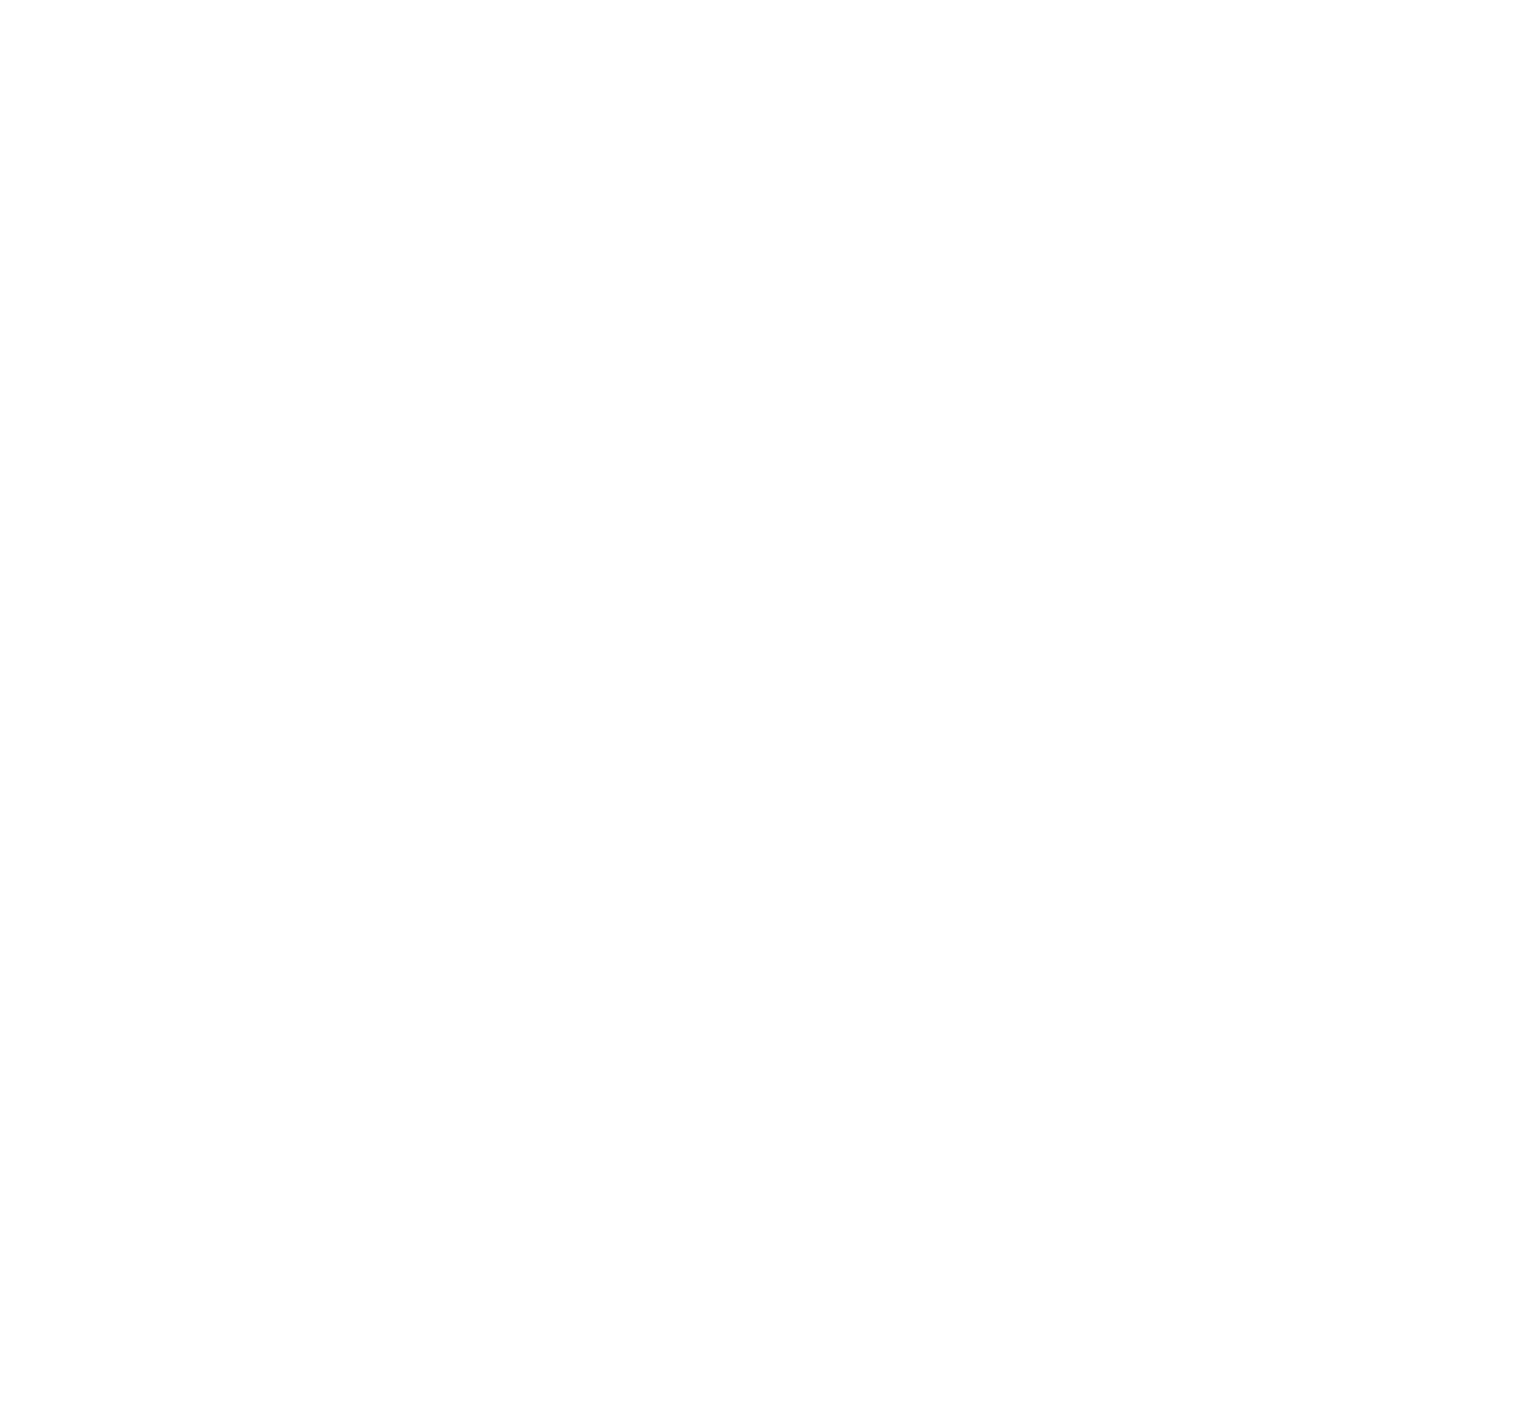 Jastrzebska Spólka Weglowa logo pour fonds sombres (PNG transparent)